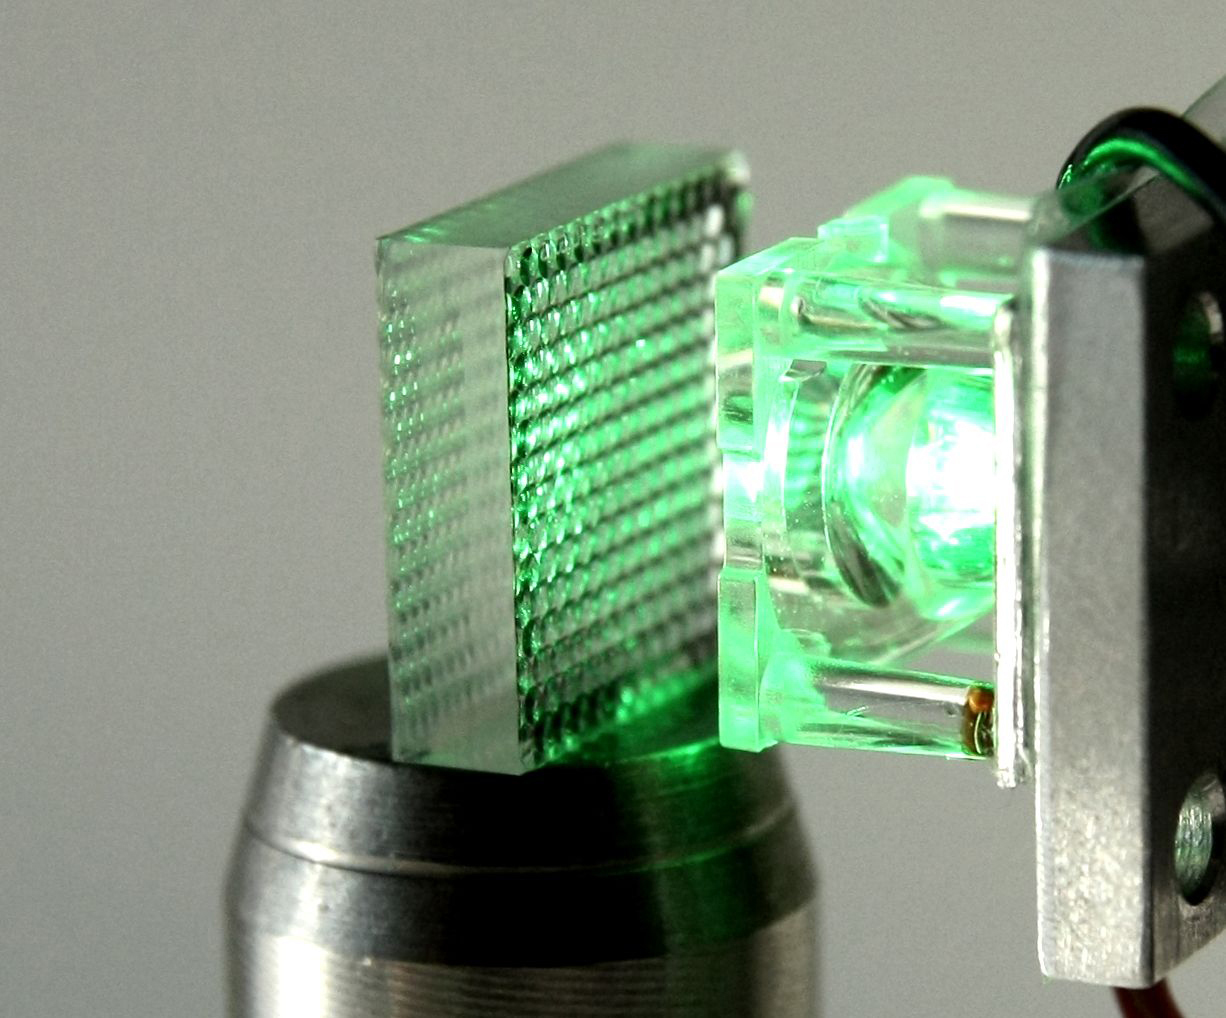 Tiny nanometer arrays of microscopic lenses